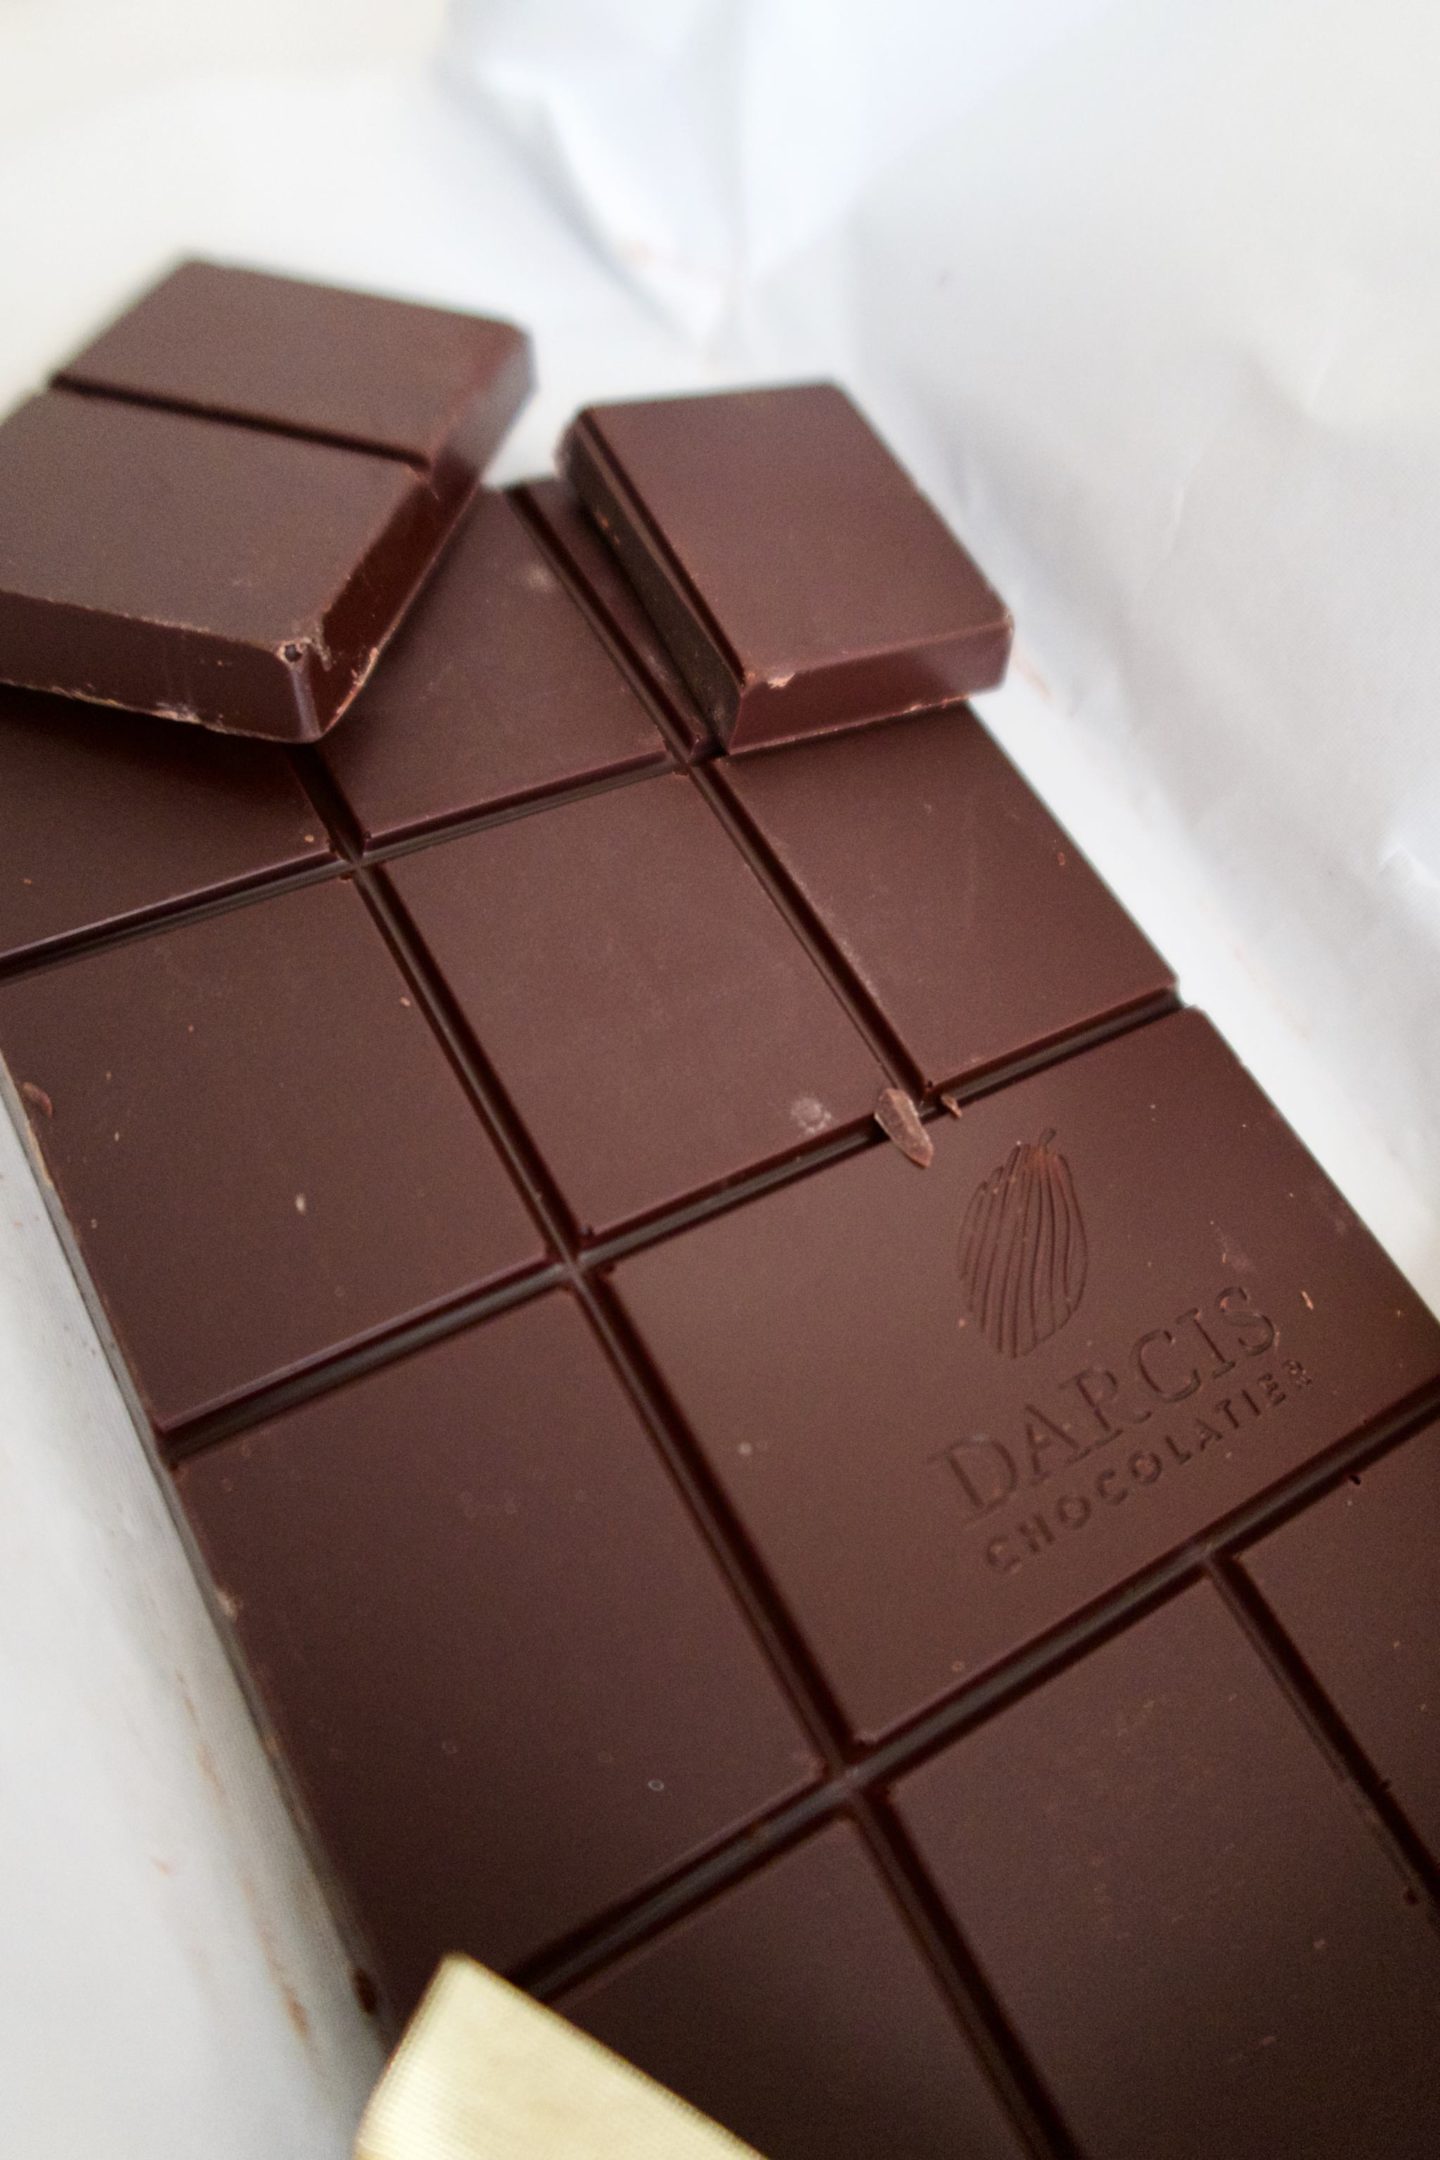 Macaya – Liqueur de chocolat - Darcis chocolatier